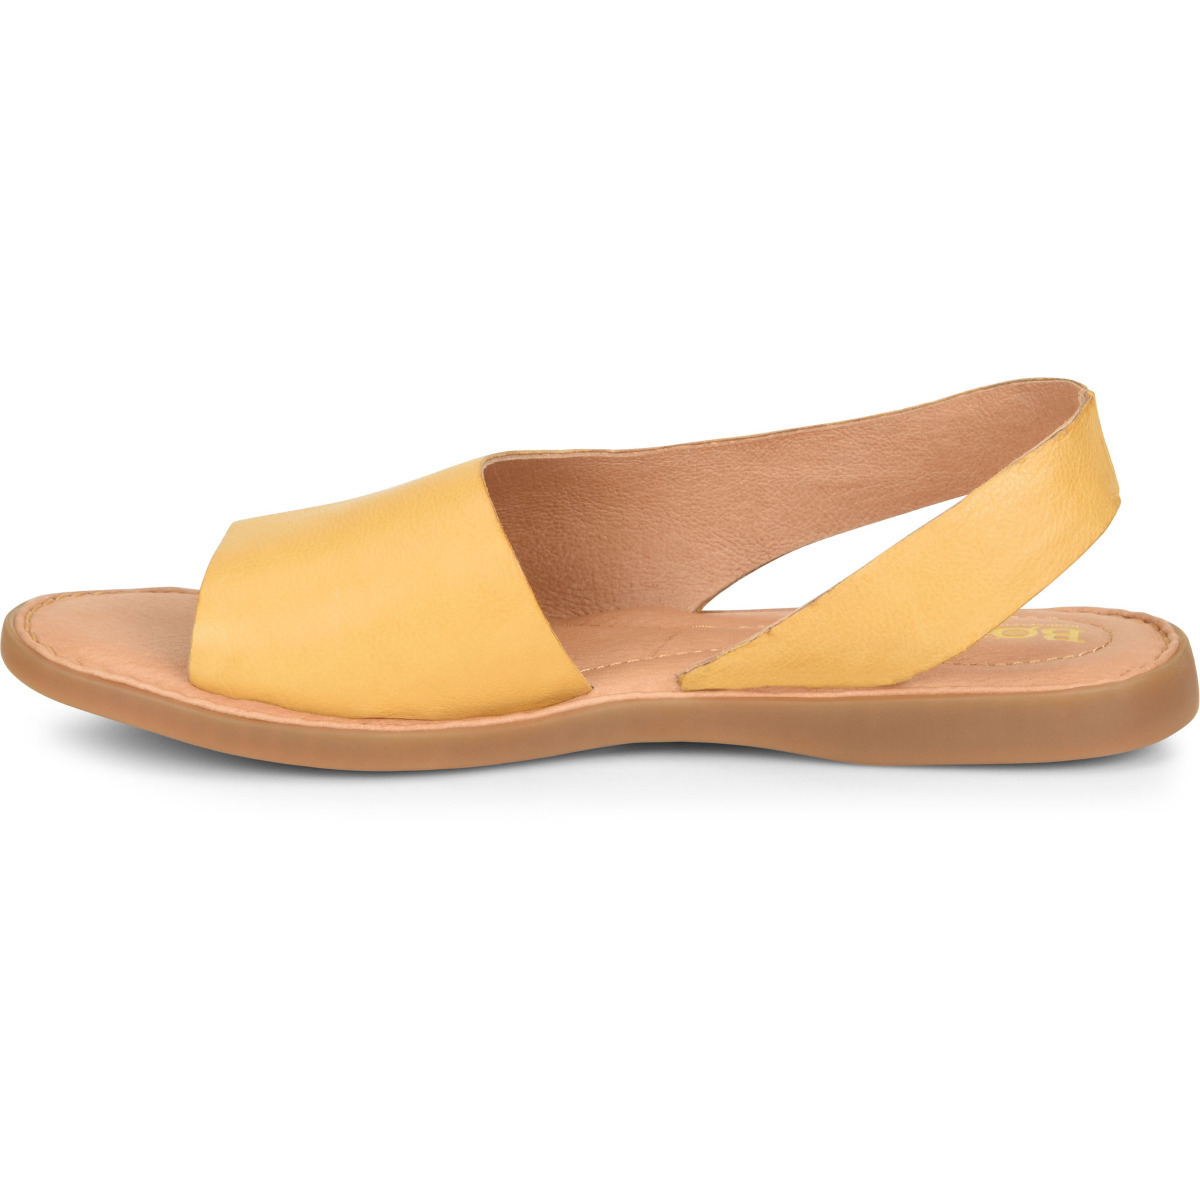 Born Women's Inlet Sandal Orca (Yellow) - BR0002292 YELLOW - YELLOW, 8